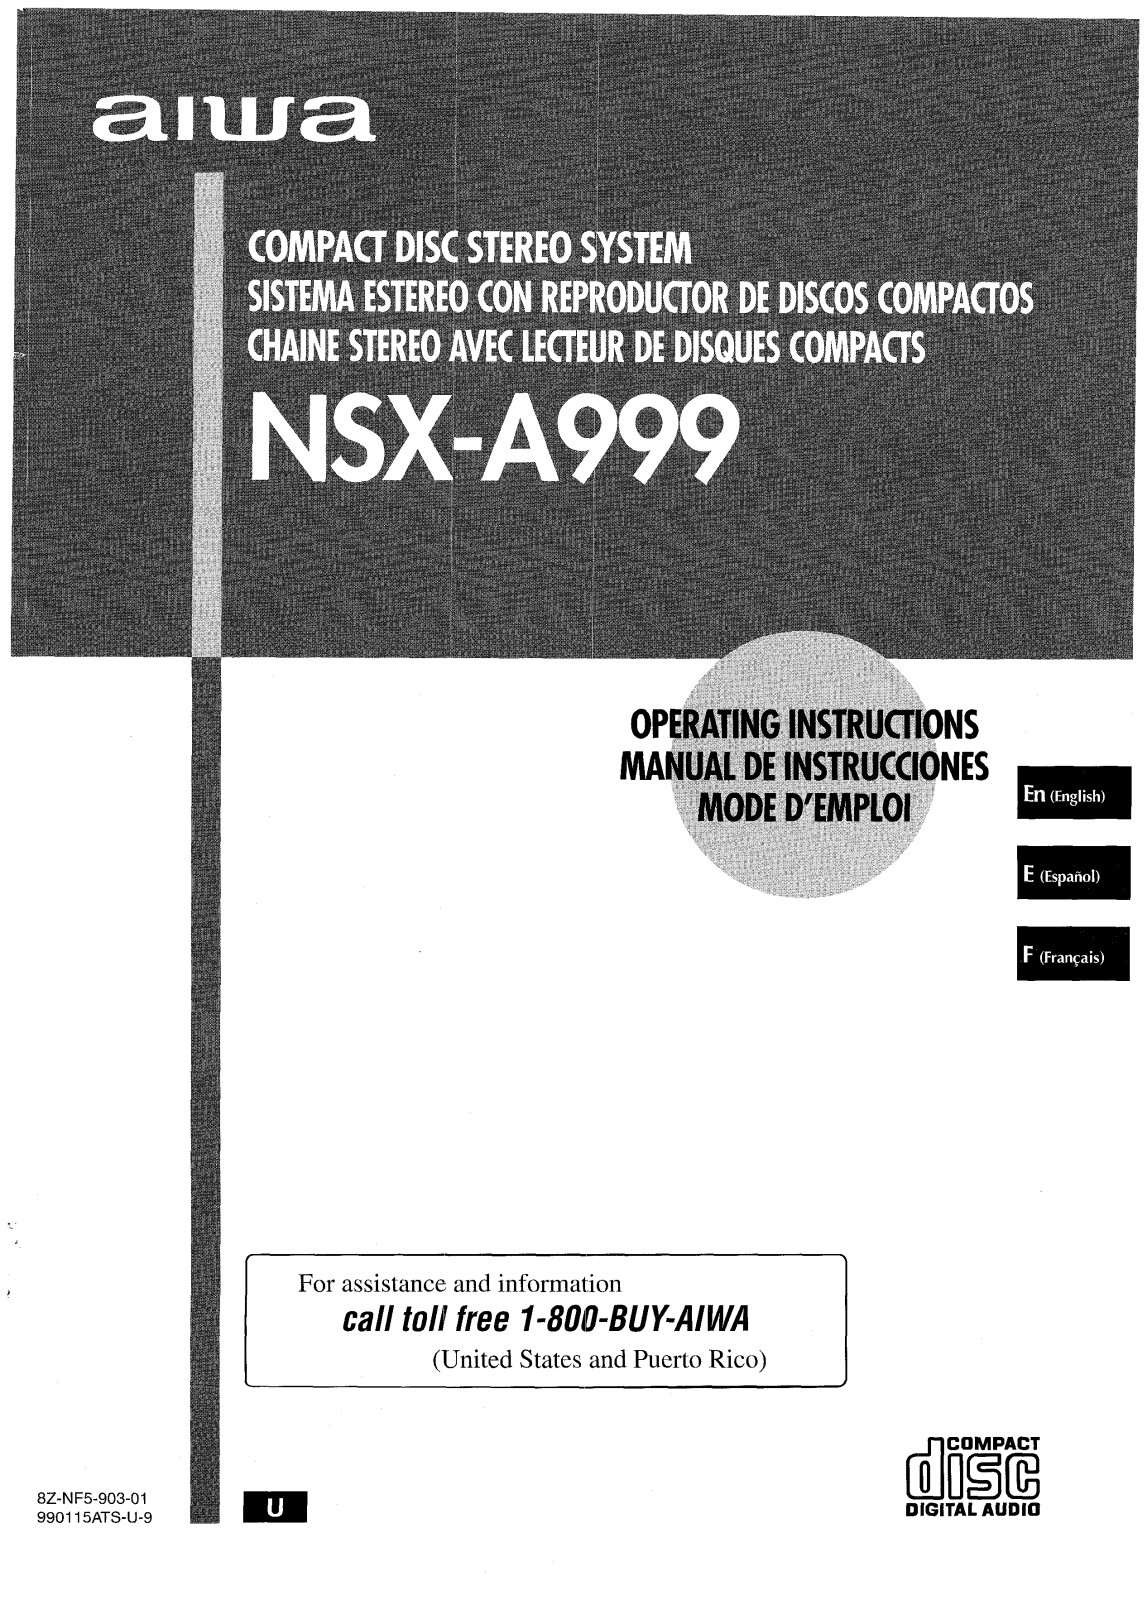 Sony CXNA999 Operating Manual